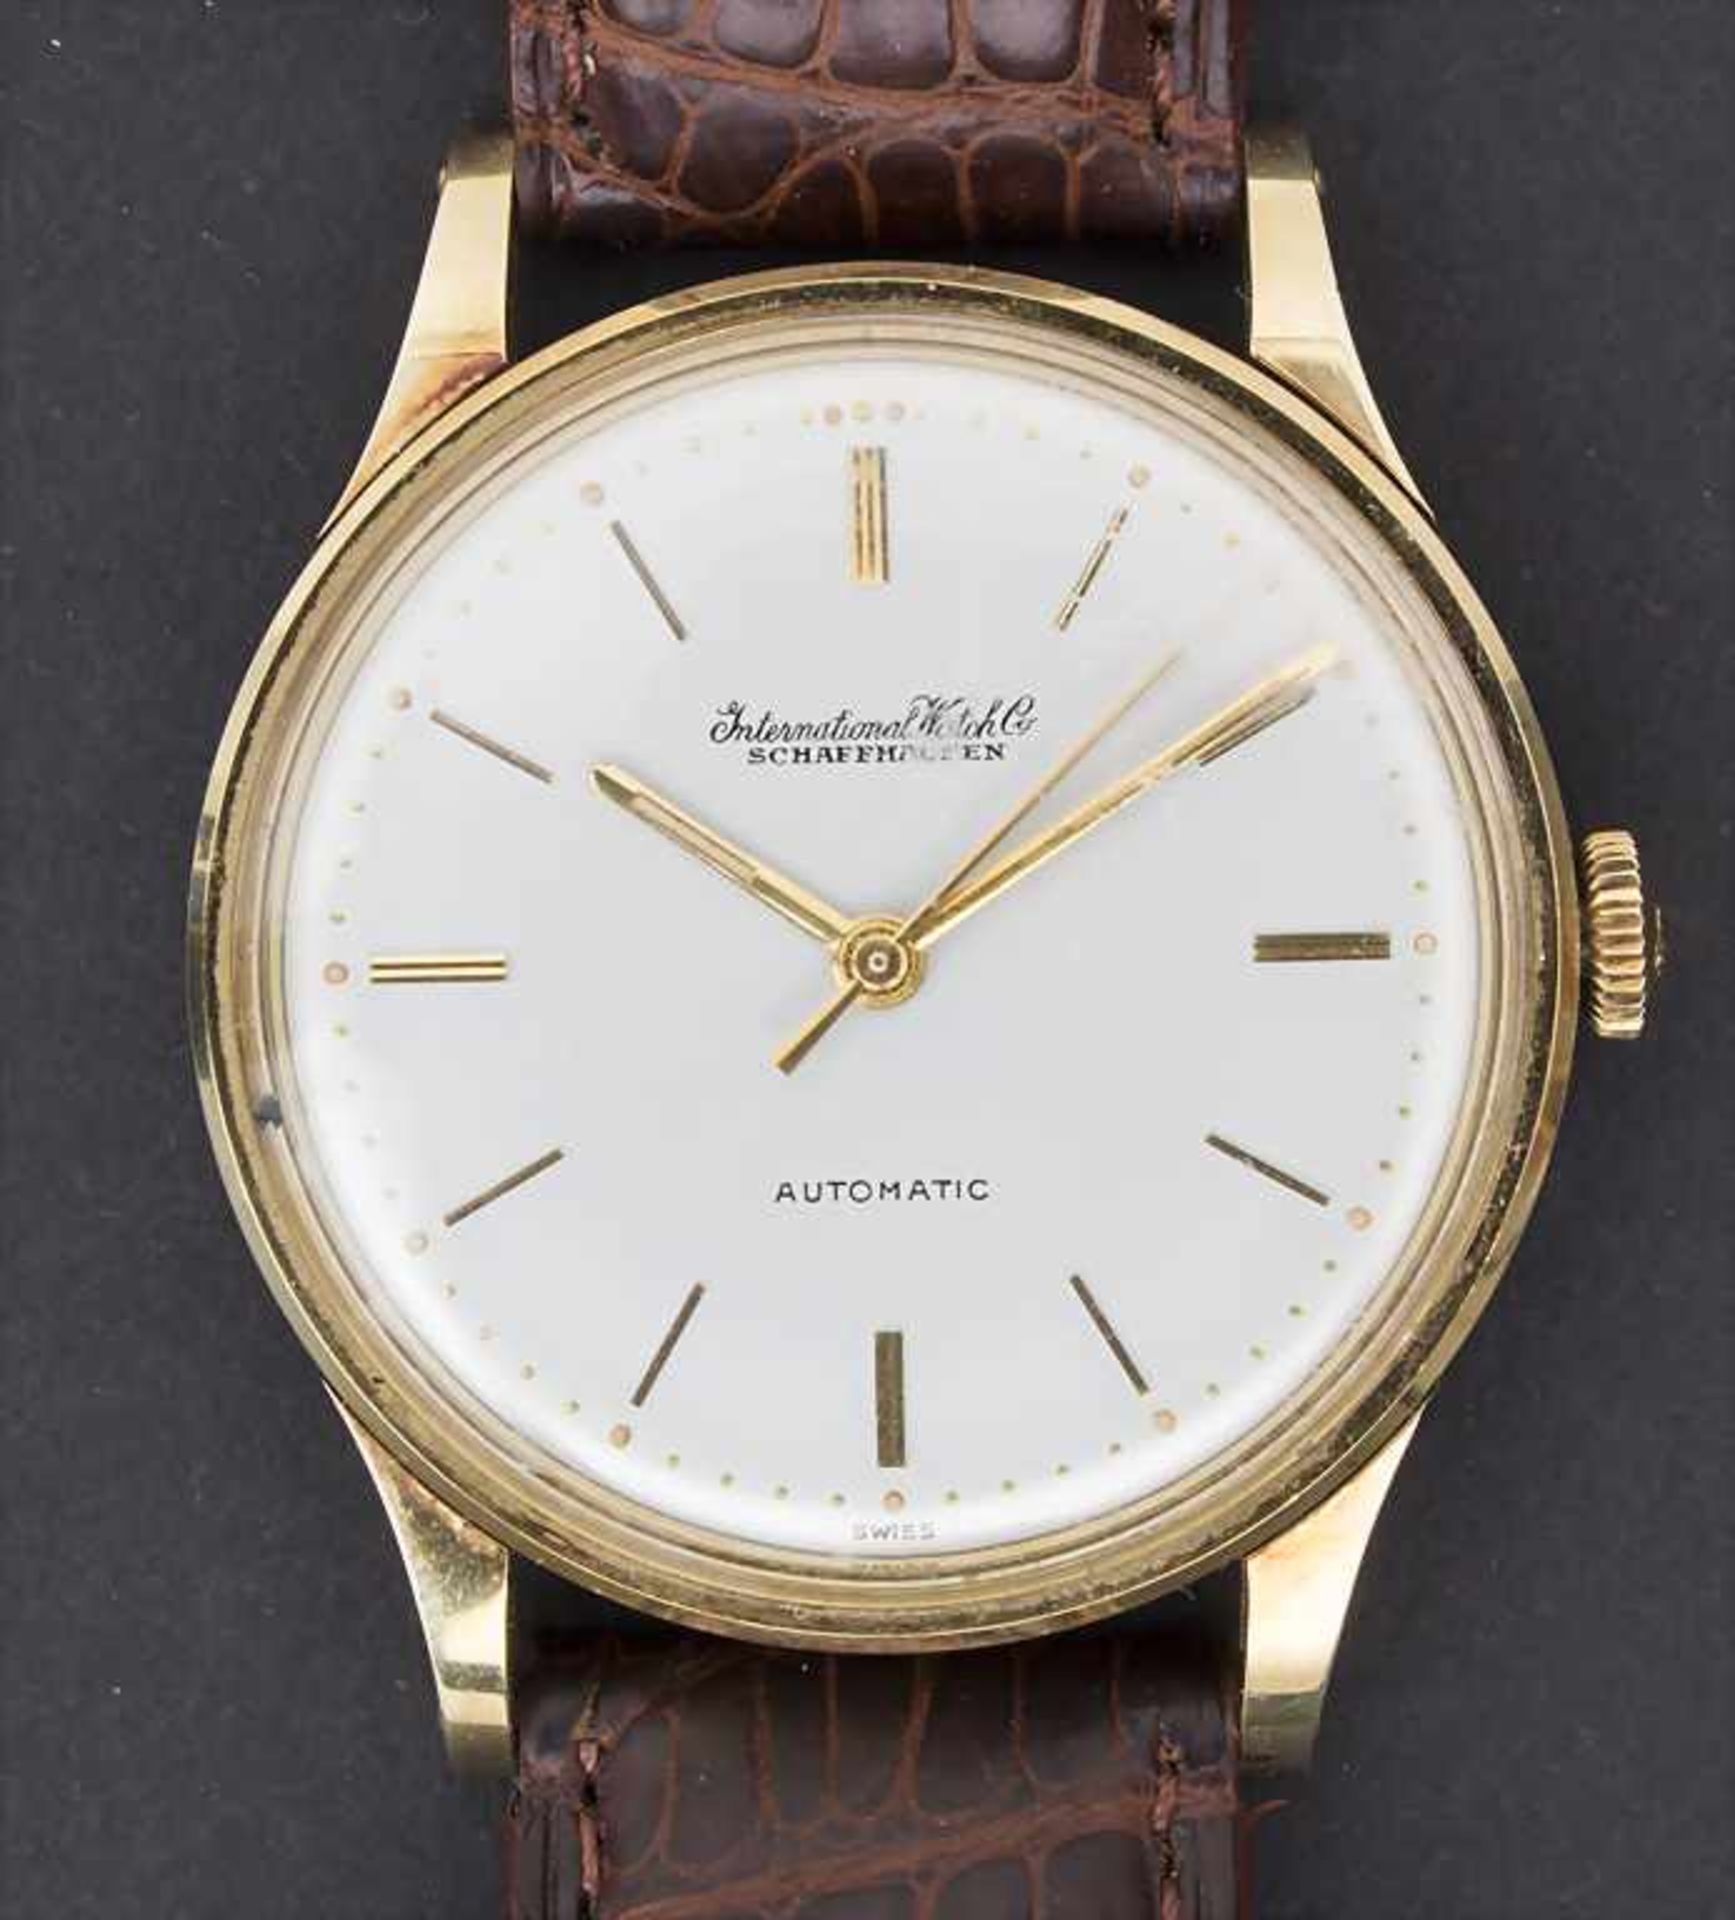 HAU IWC Automatik / A men's wrist watch, Schaffhausen, um 1960